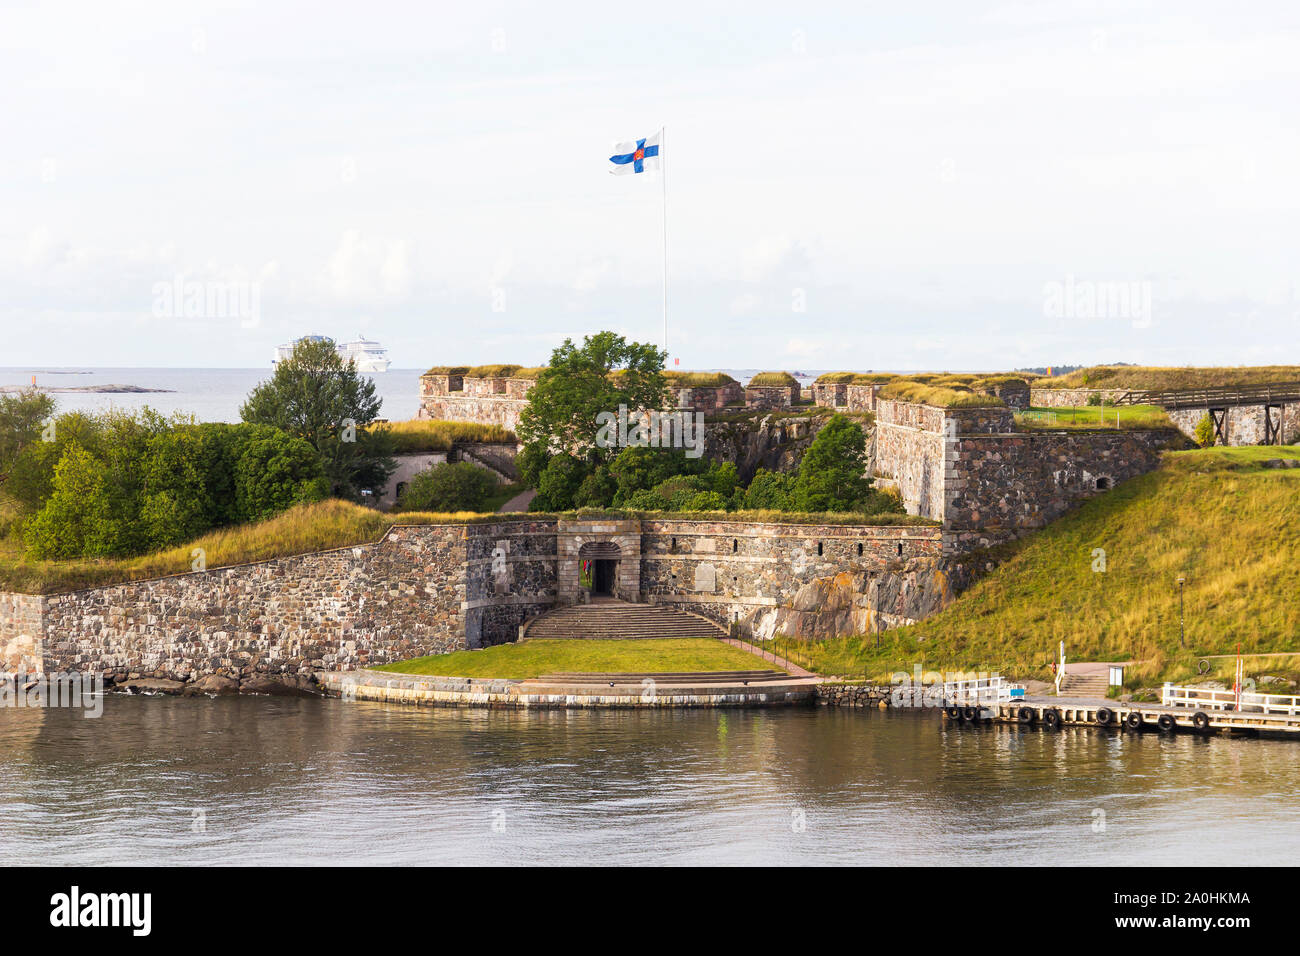 Suomenlinna sea fortress, King's Gate, UNESCO World Heritage site, at the coast of Baltic sea, Helsinki, Finland Stock Photo